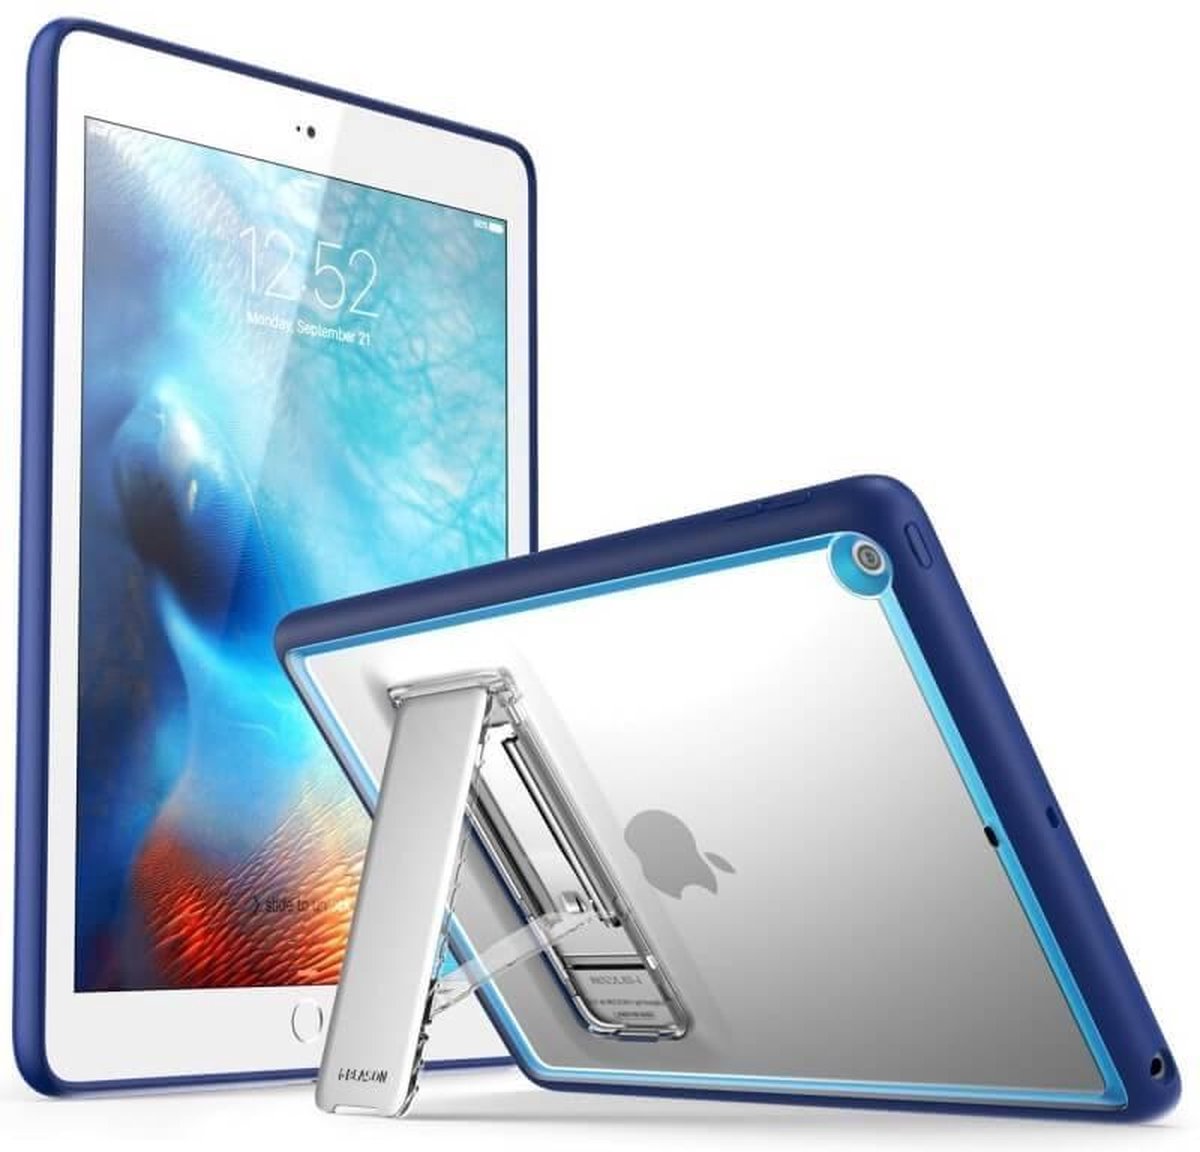 i-Blason iPad hoes 2017 Halo Slim Case blauw